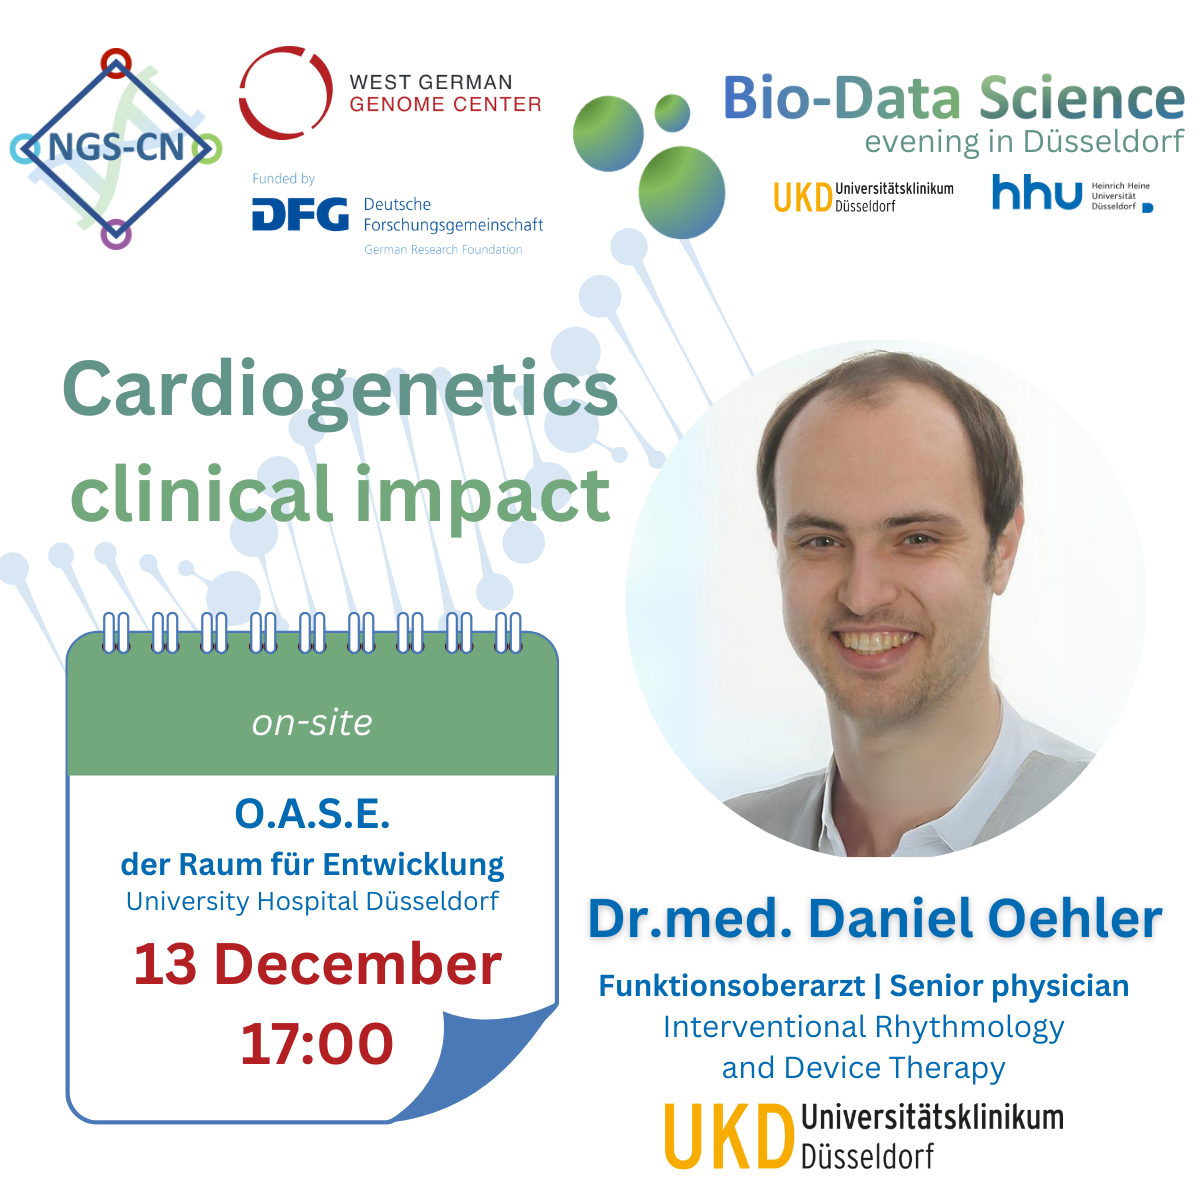 Bio Data Science Evening with Daniel Oehler